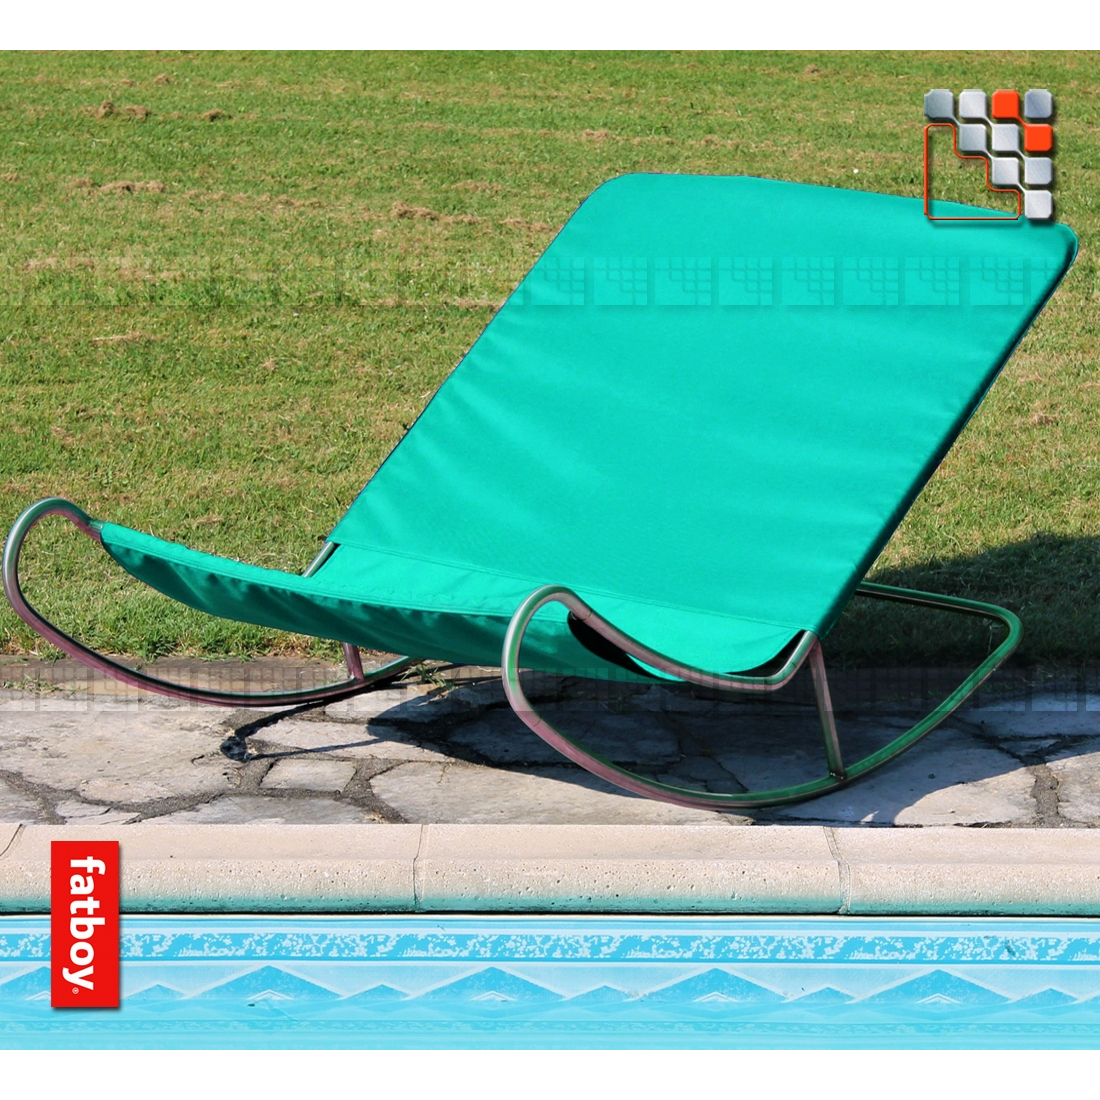 BeTransat Designxp® A17-VB103199 A la Plancha® Furniture for Outdoor Lounge